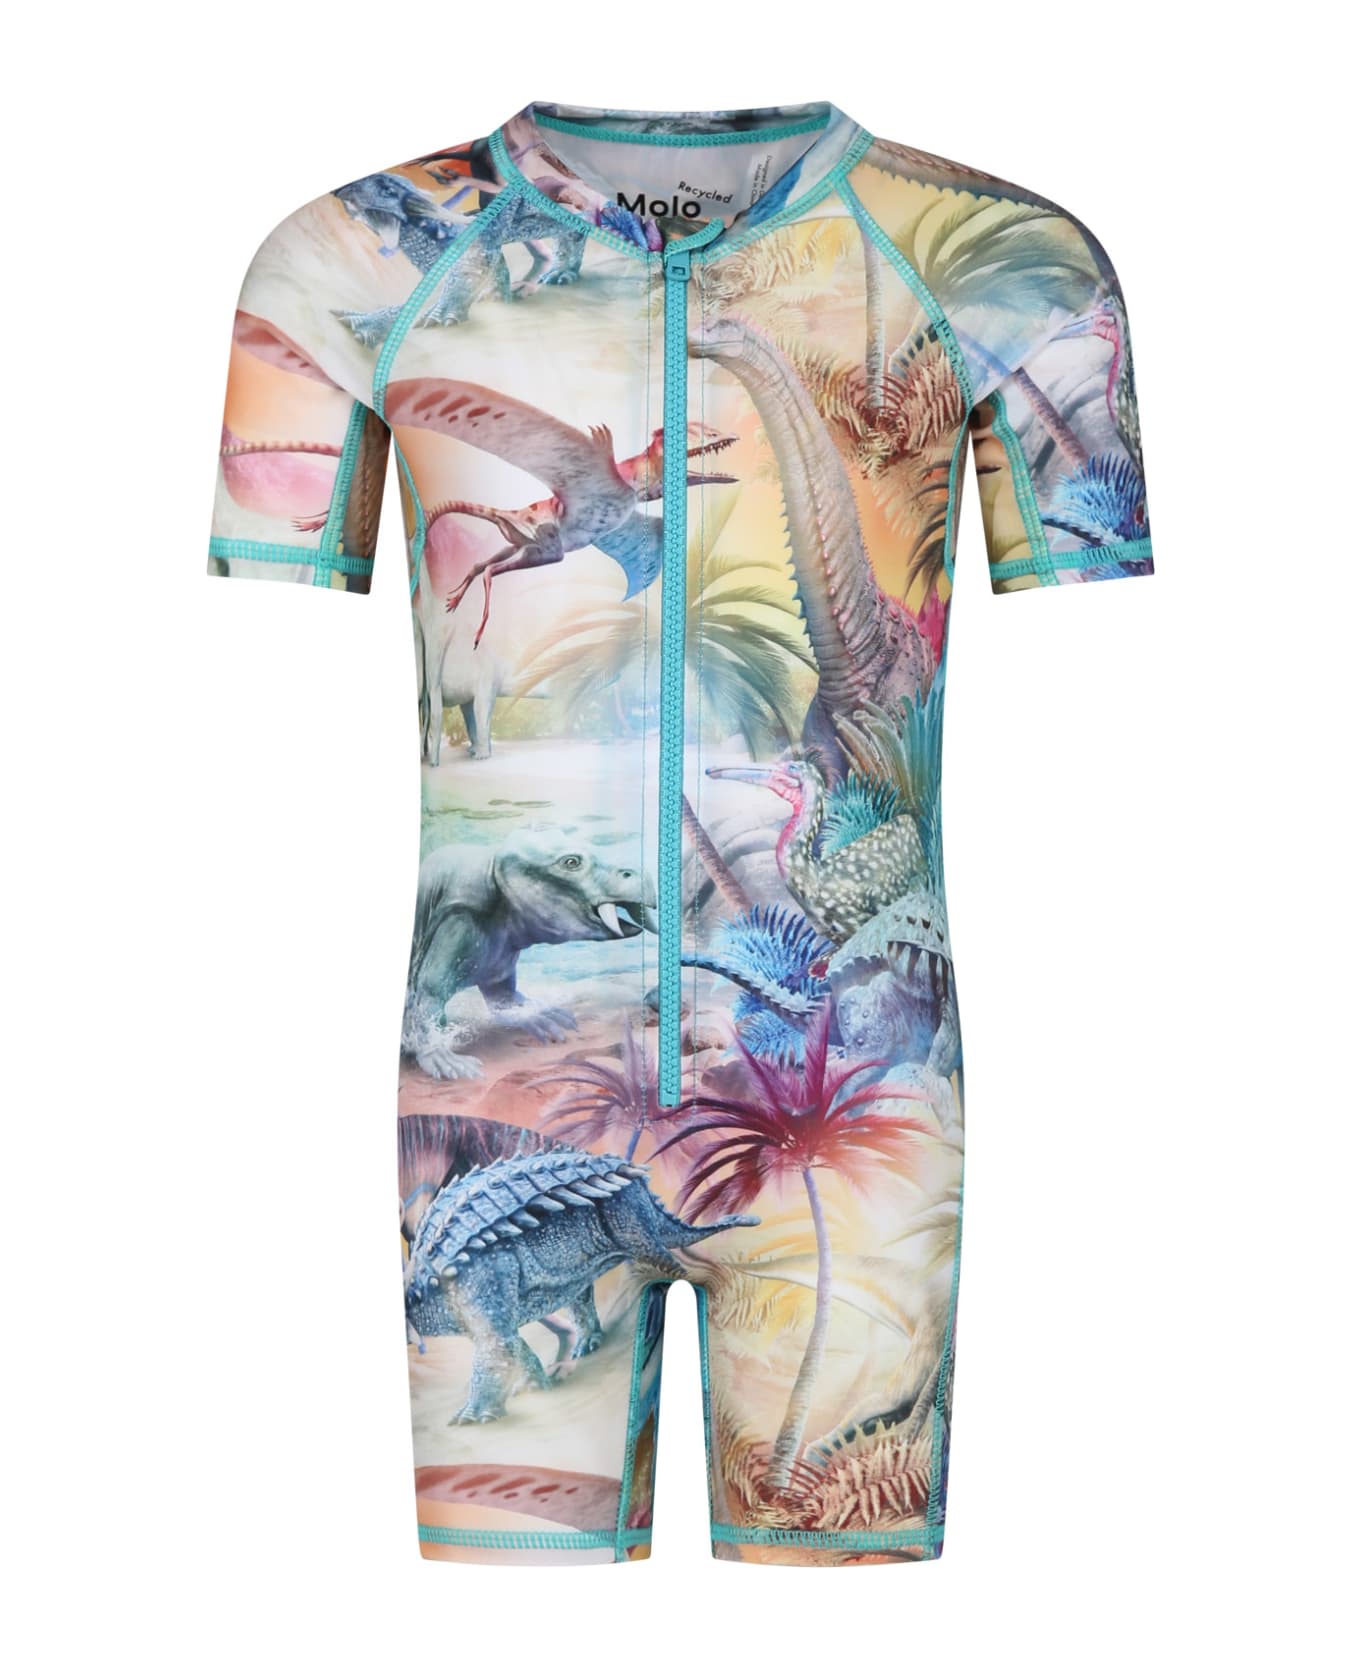 Molo Multicolor Anti-uv Swimsuit For Boy With Dinosaur Print - Multicolor